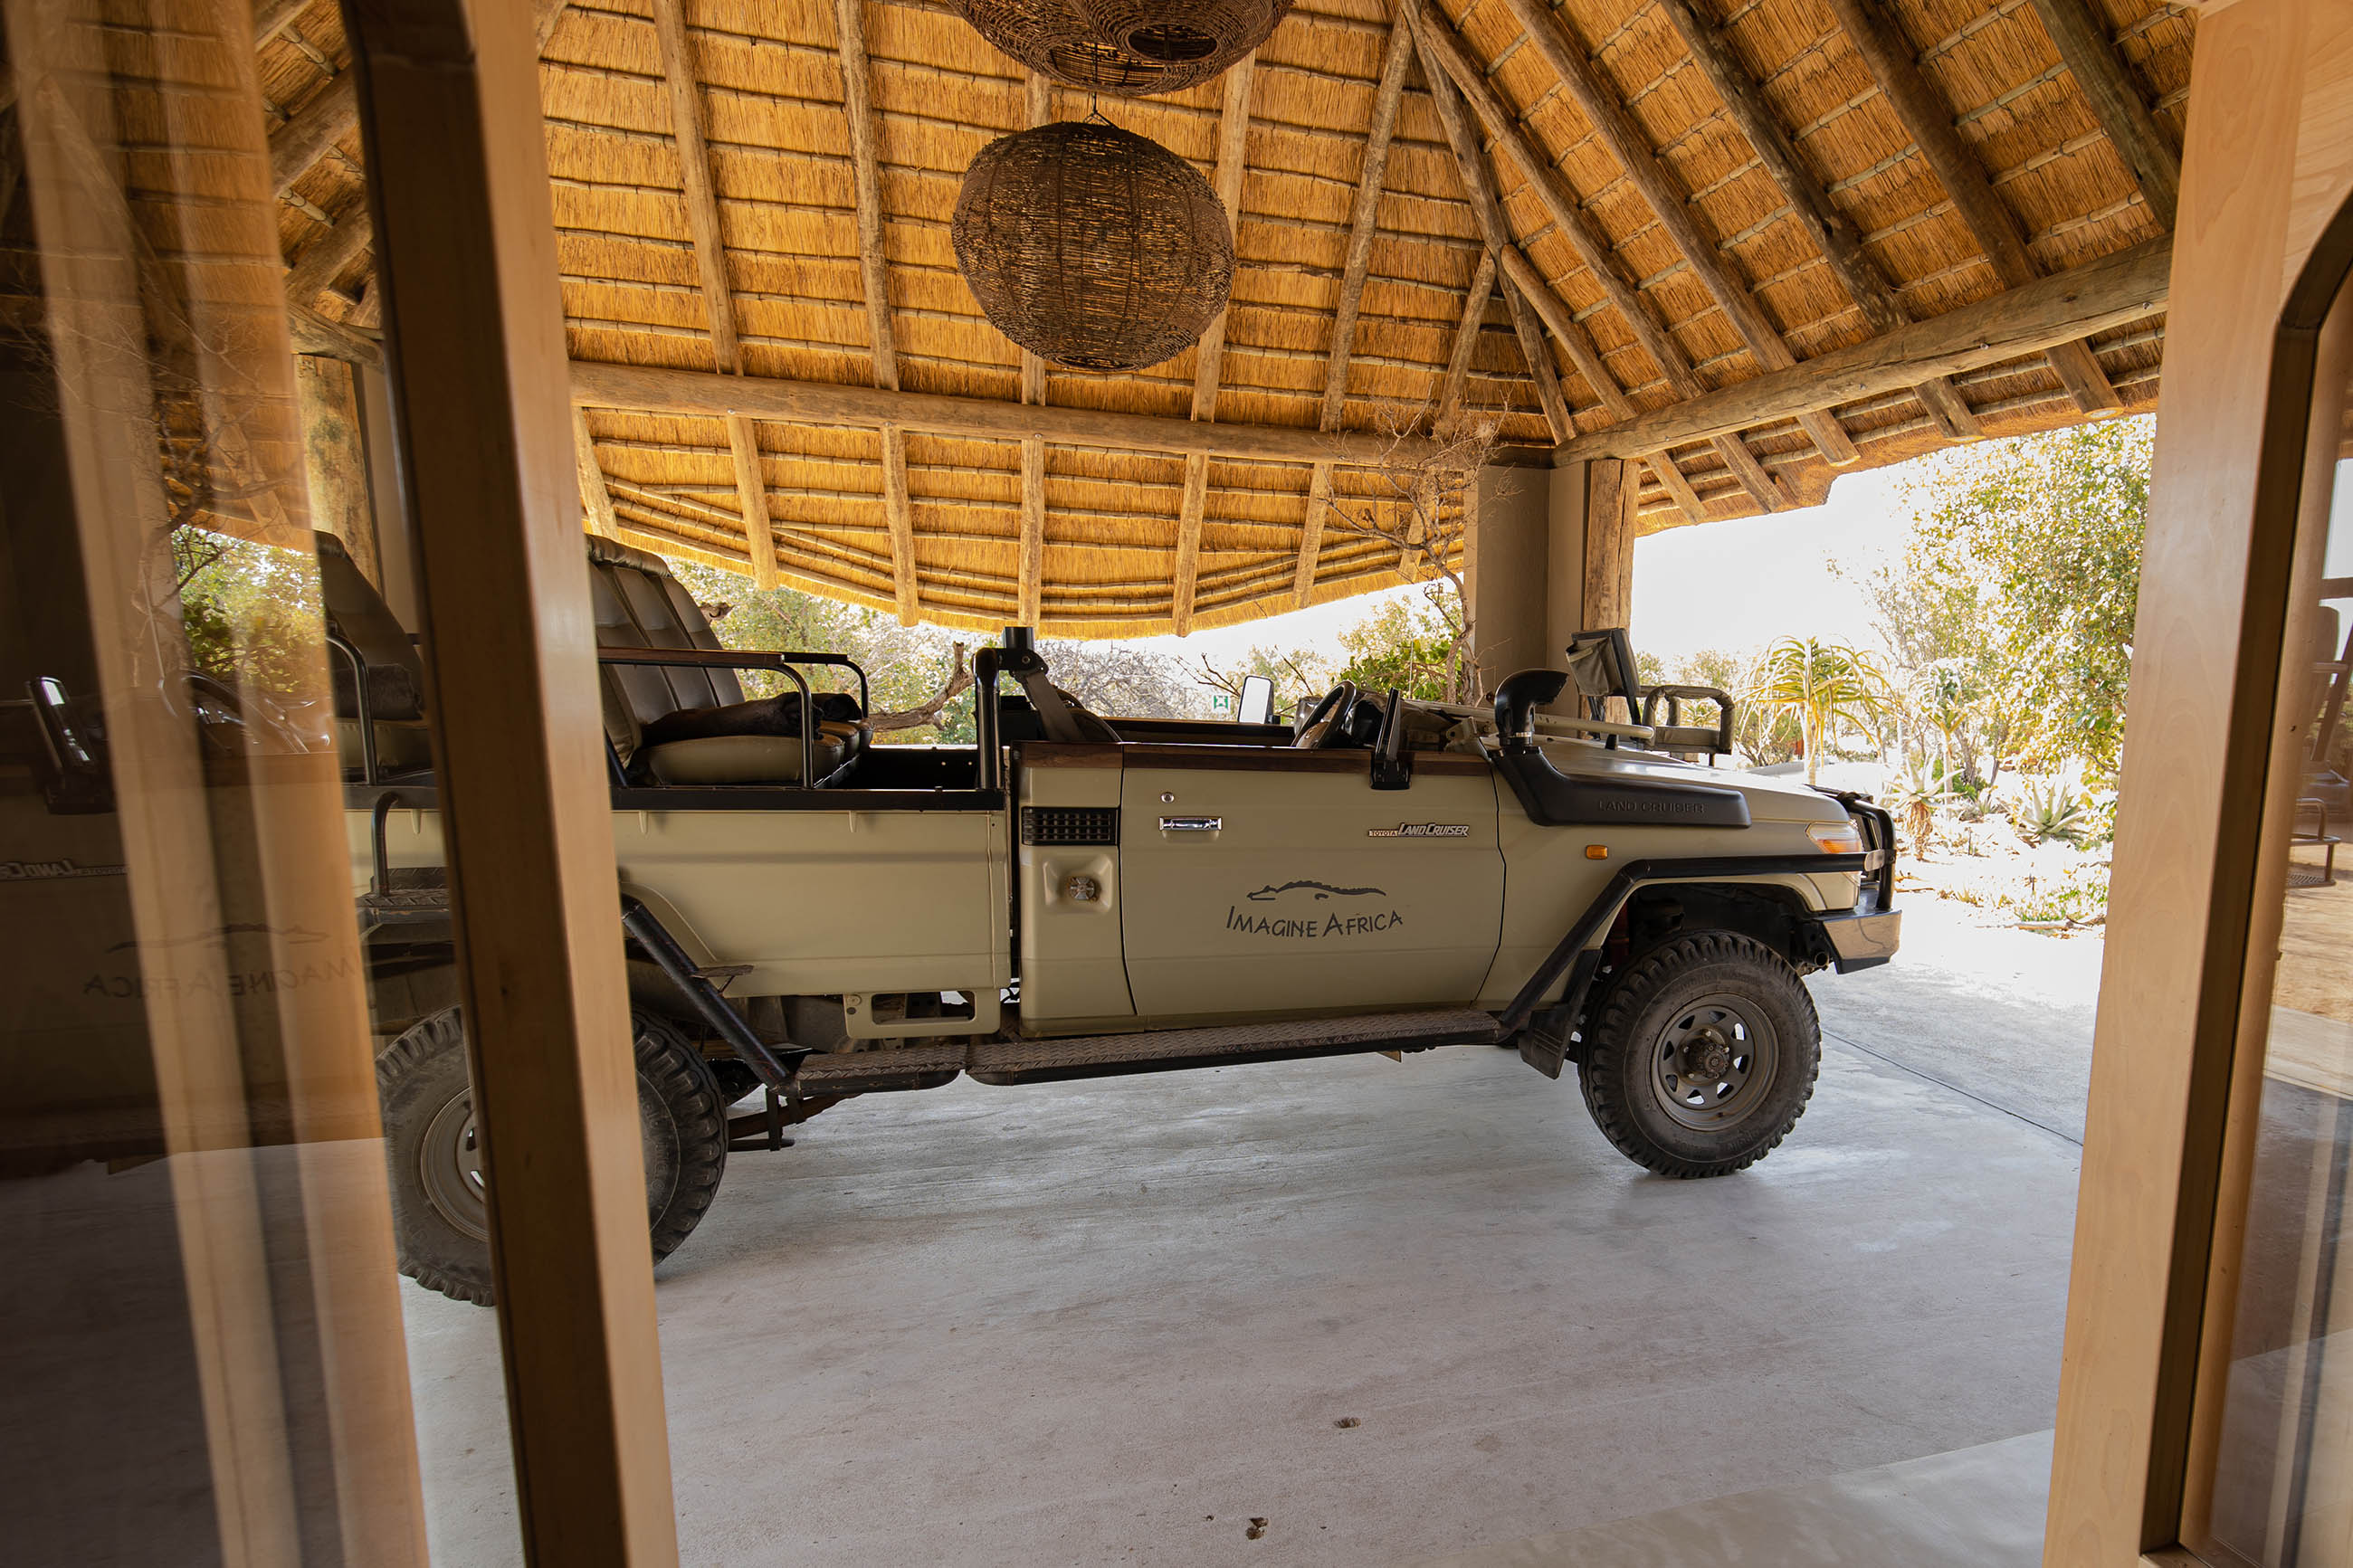 Imagine Africa safari car